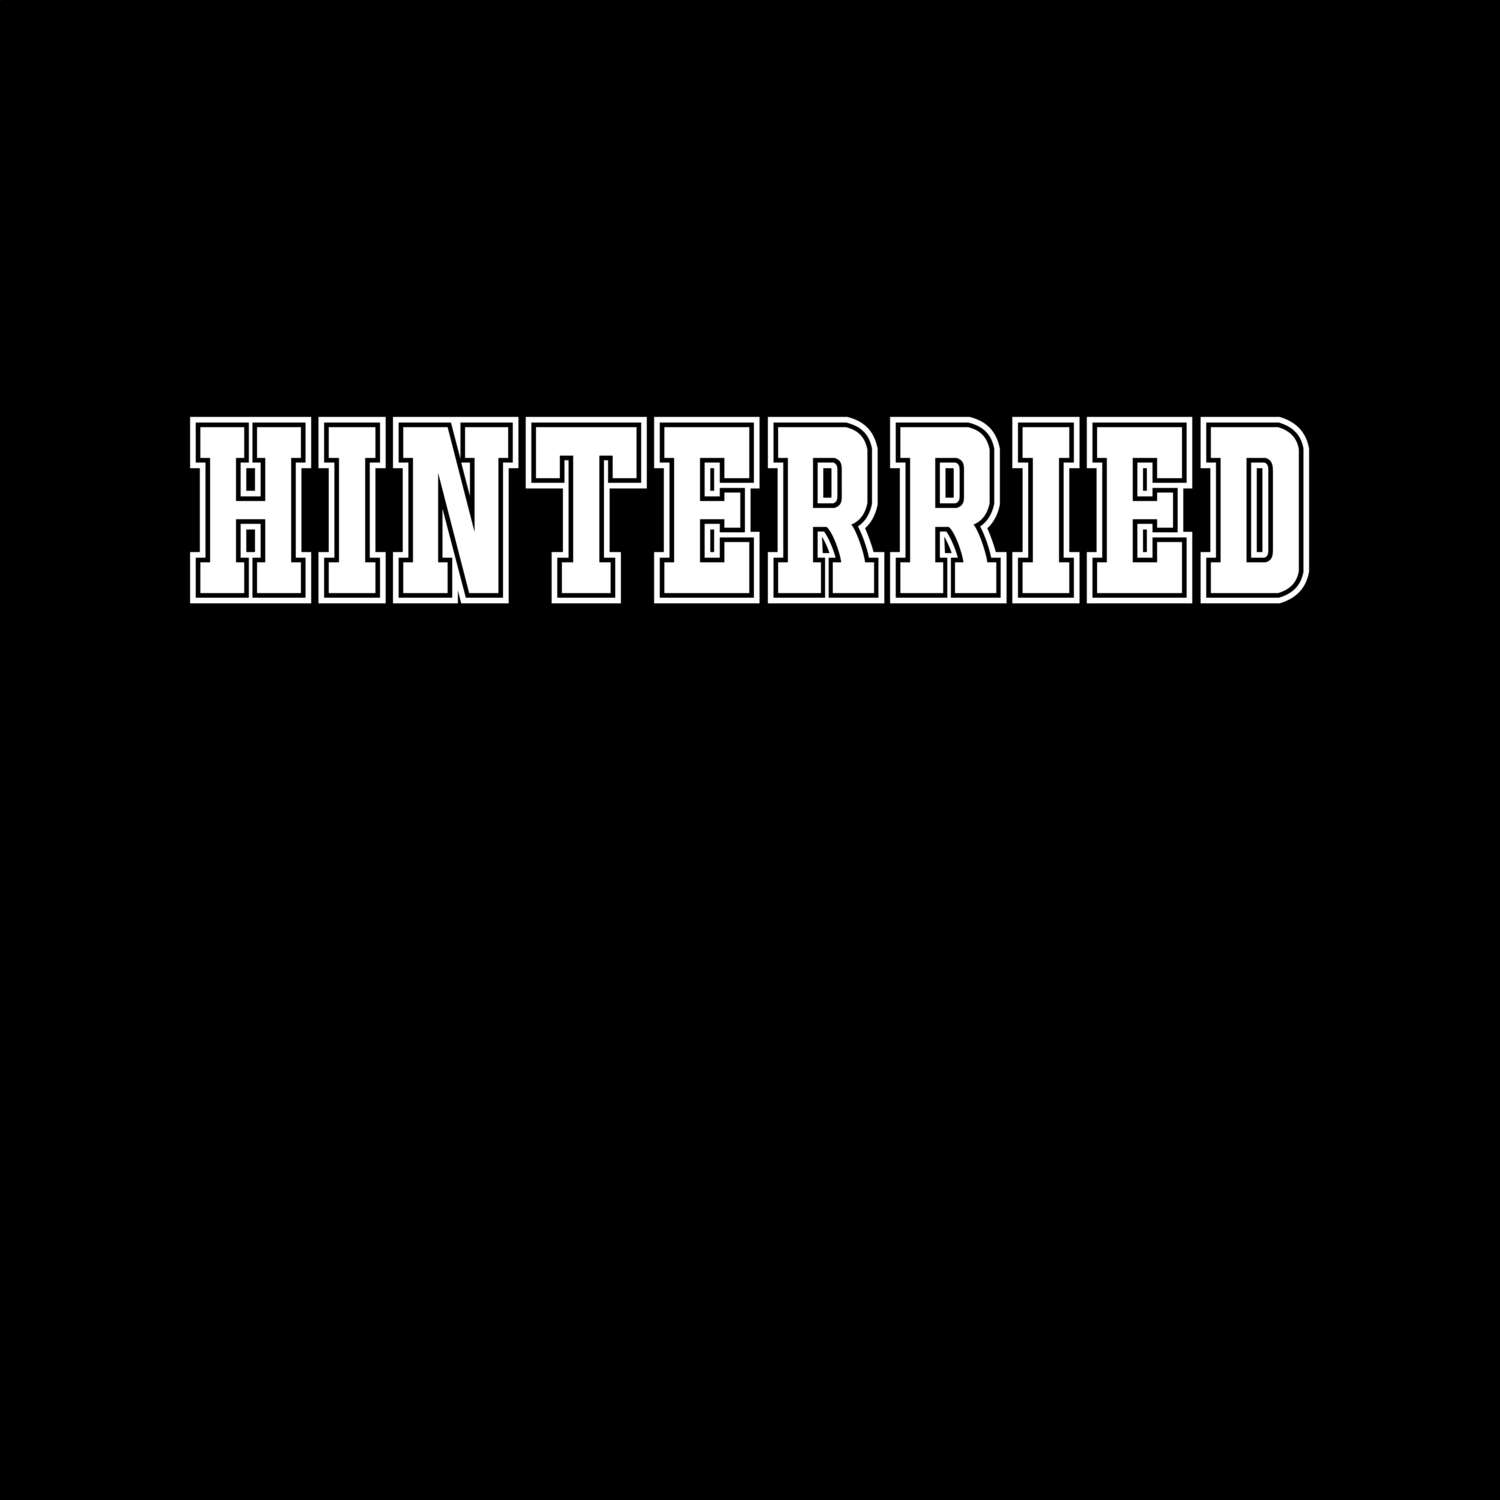 Hinterried T-Shirt »Classic«